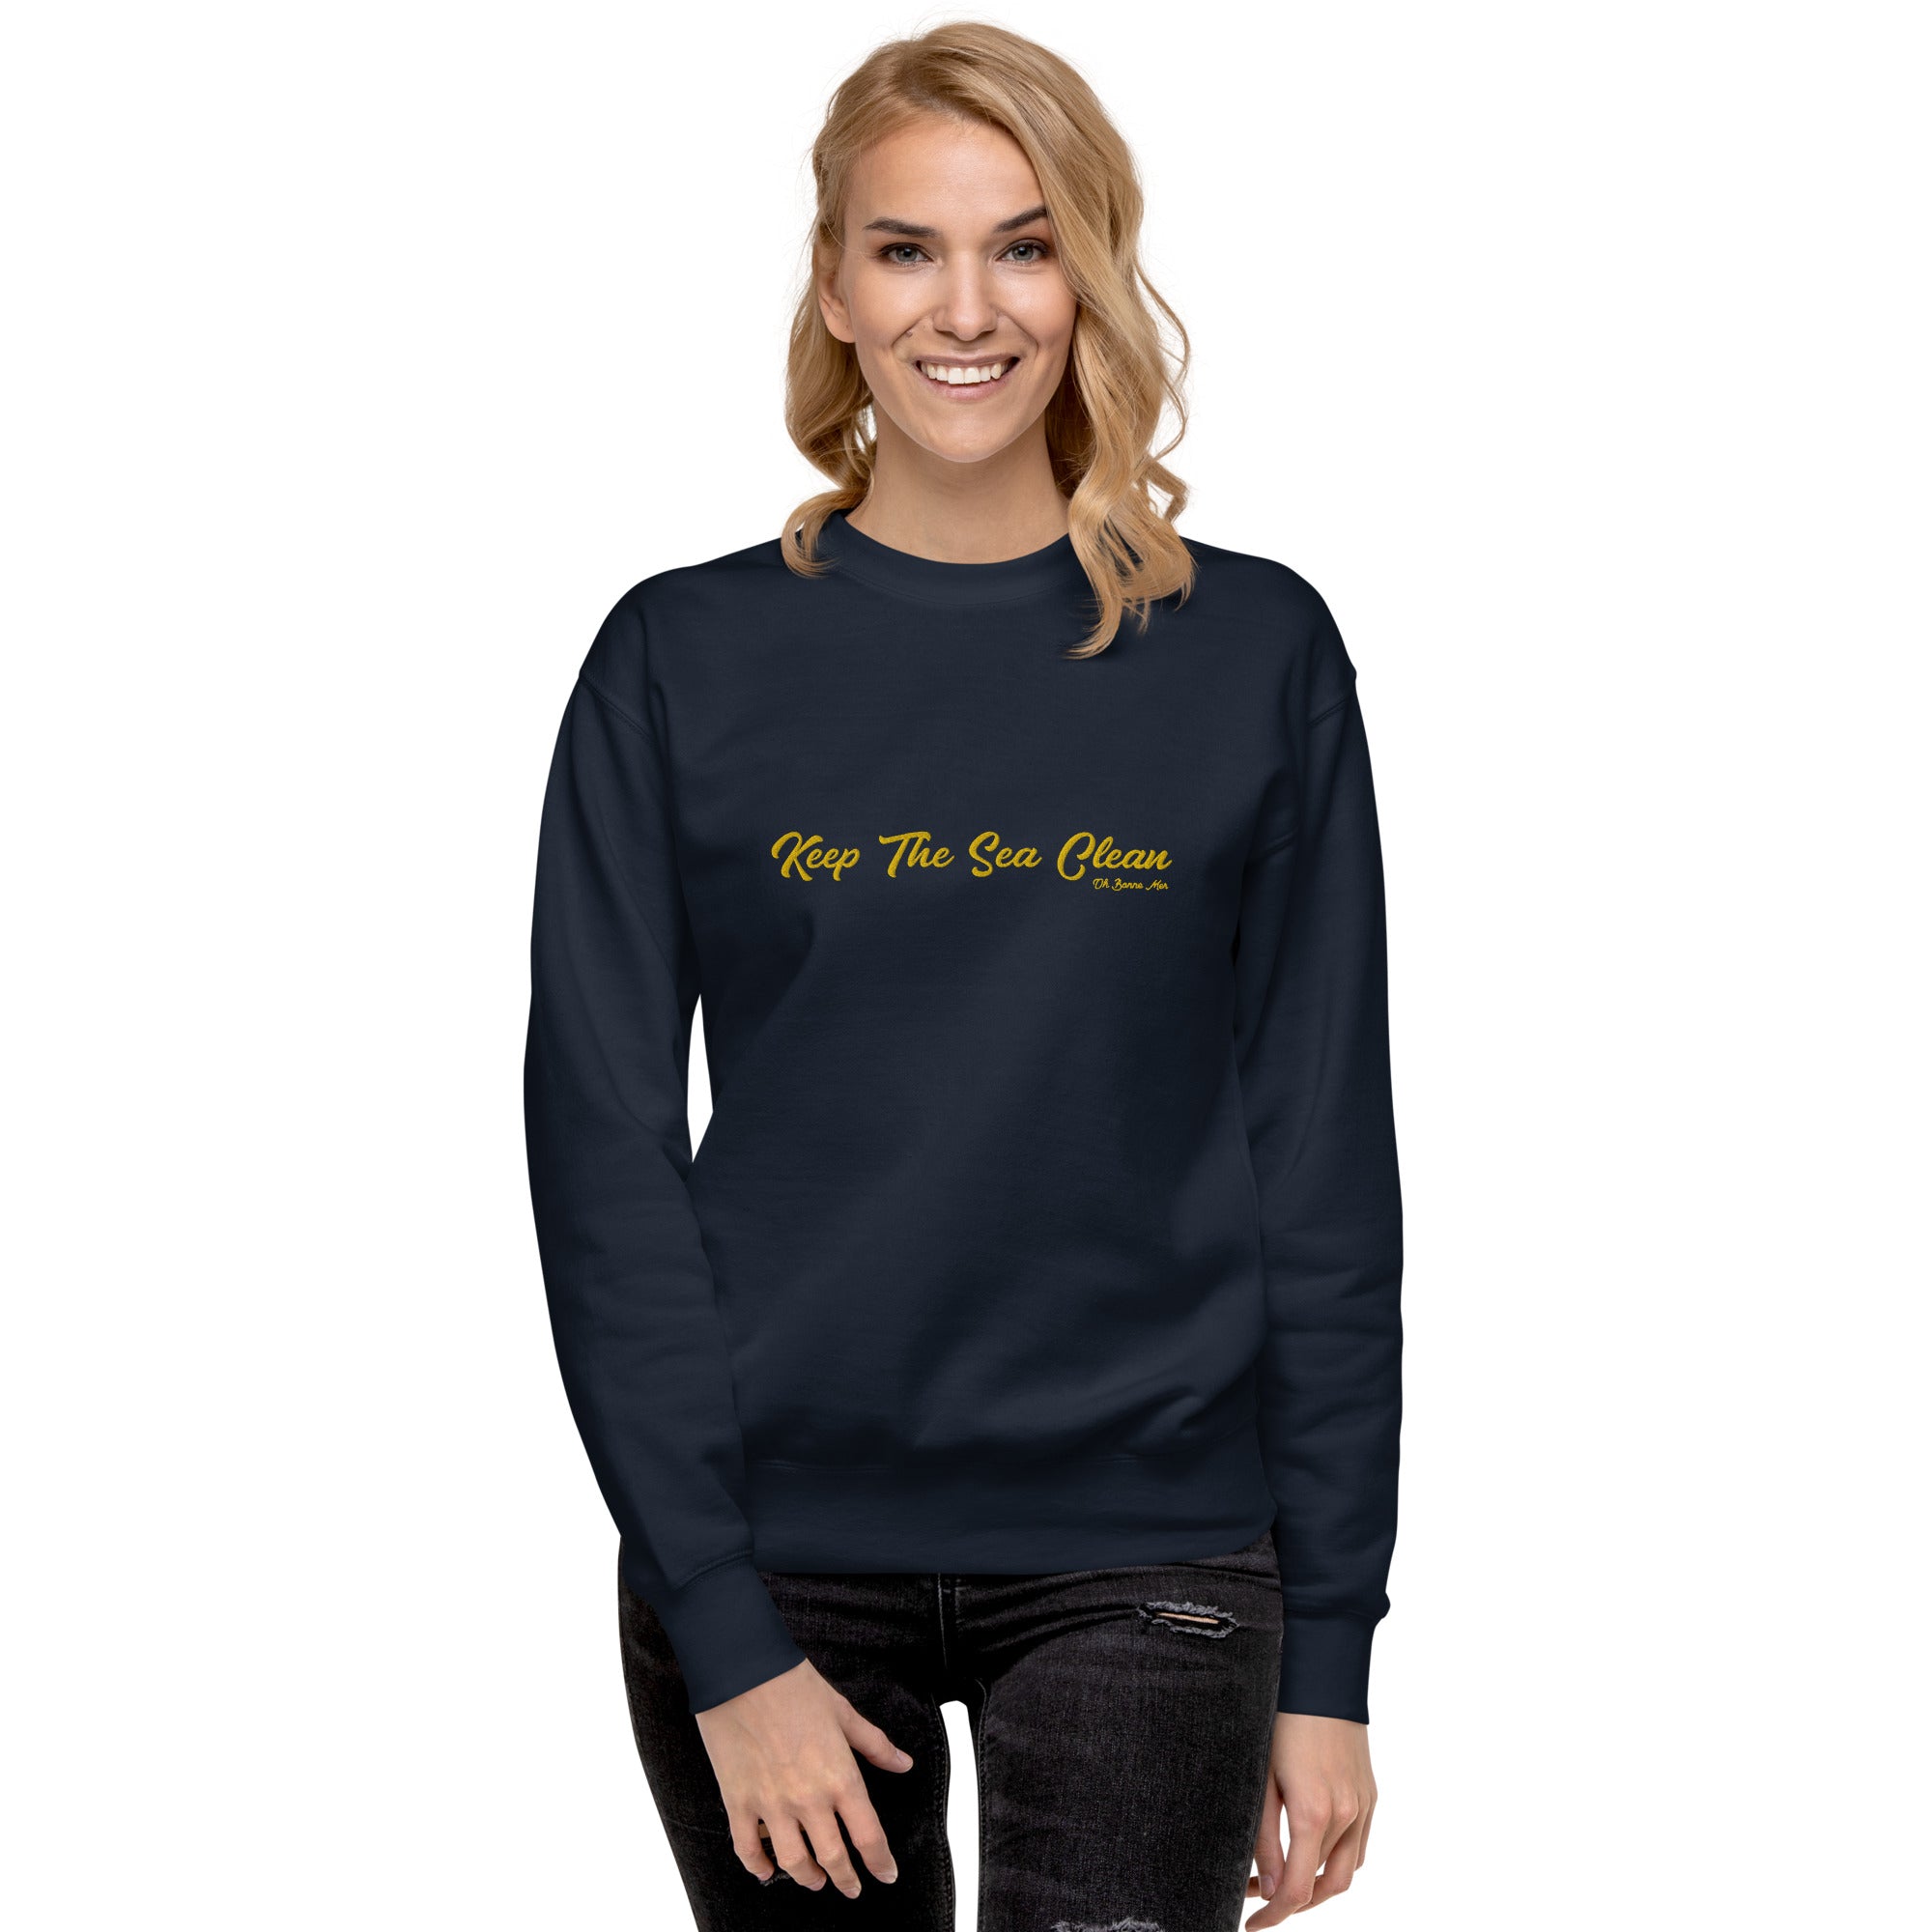 Unisex Premium Sweatshirt Keep The Sea Clean large embroidered pattern